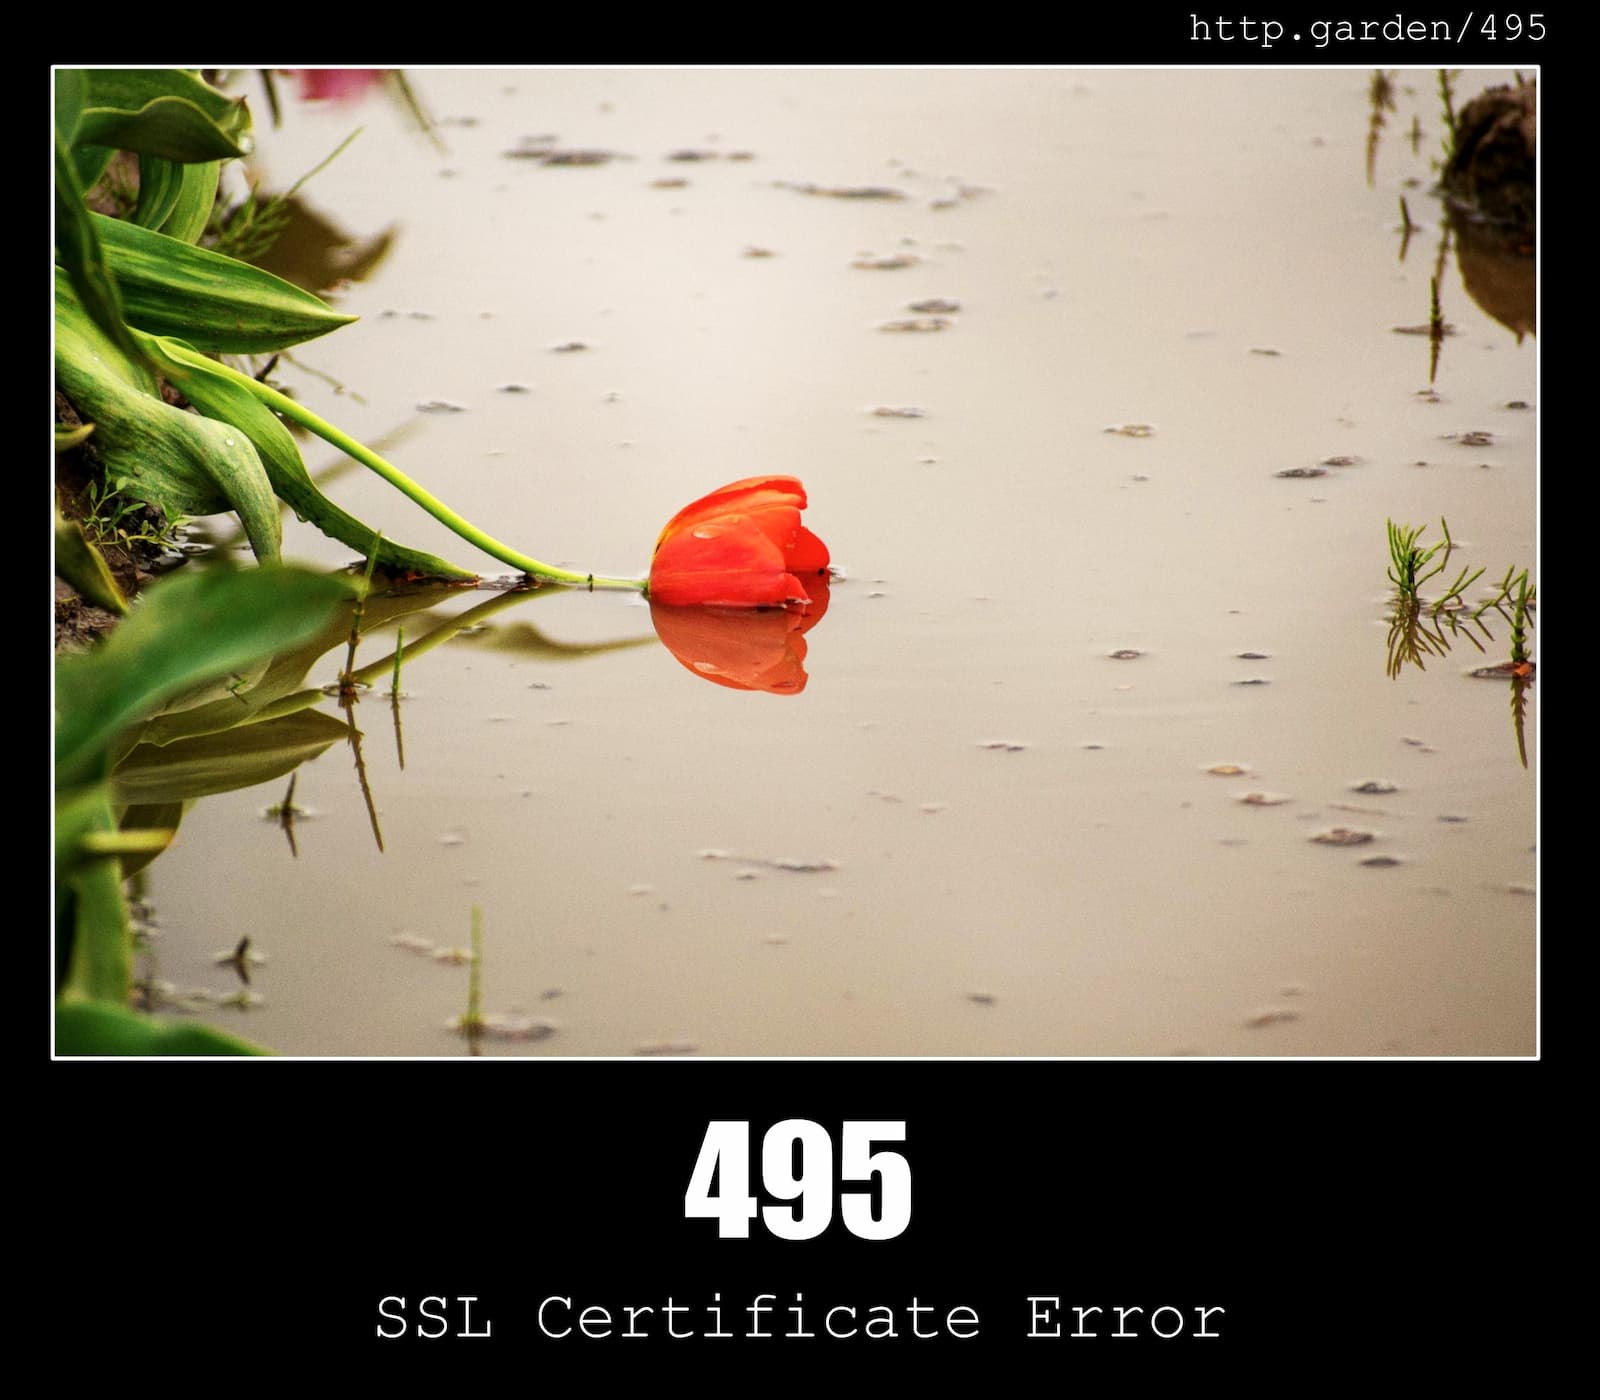 HTTP Status Code 495 SSL Certificate Error & Gardening